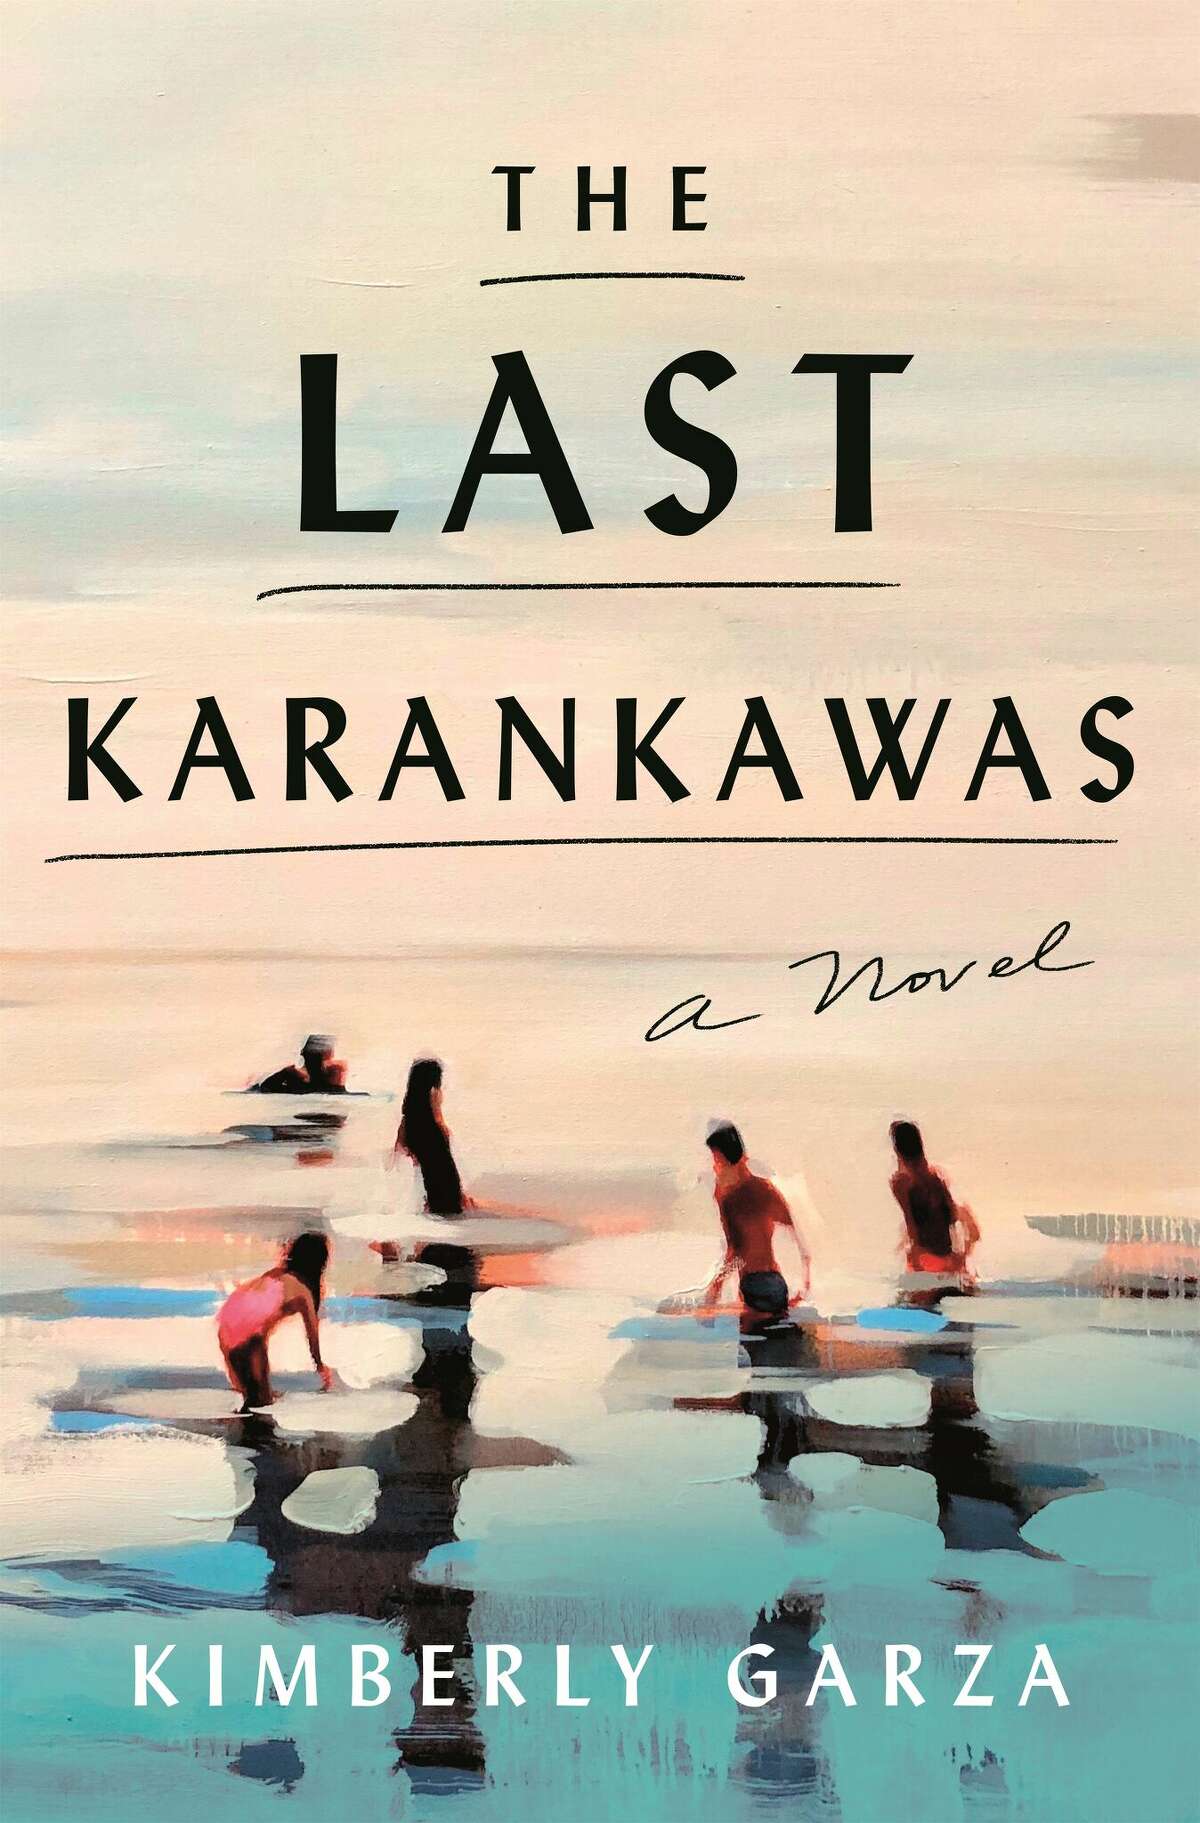 'The Last Karankawas' by Kimberly Garza, book cover.